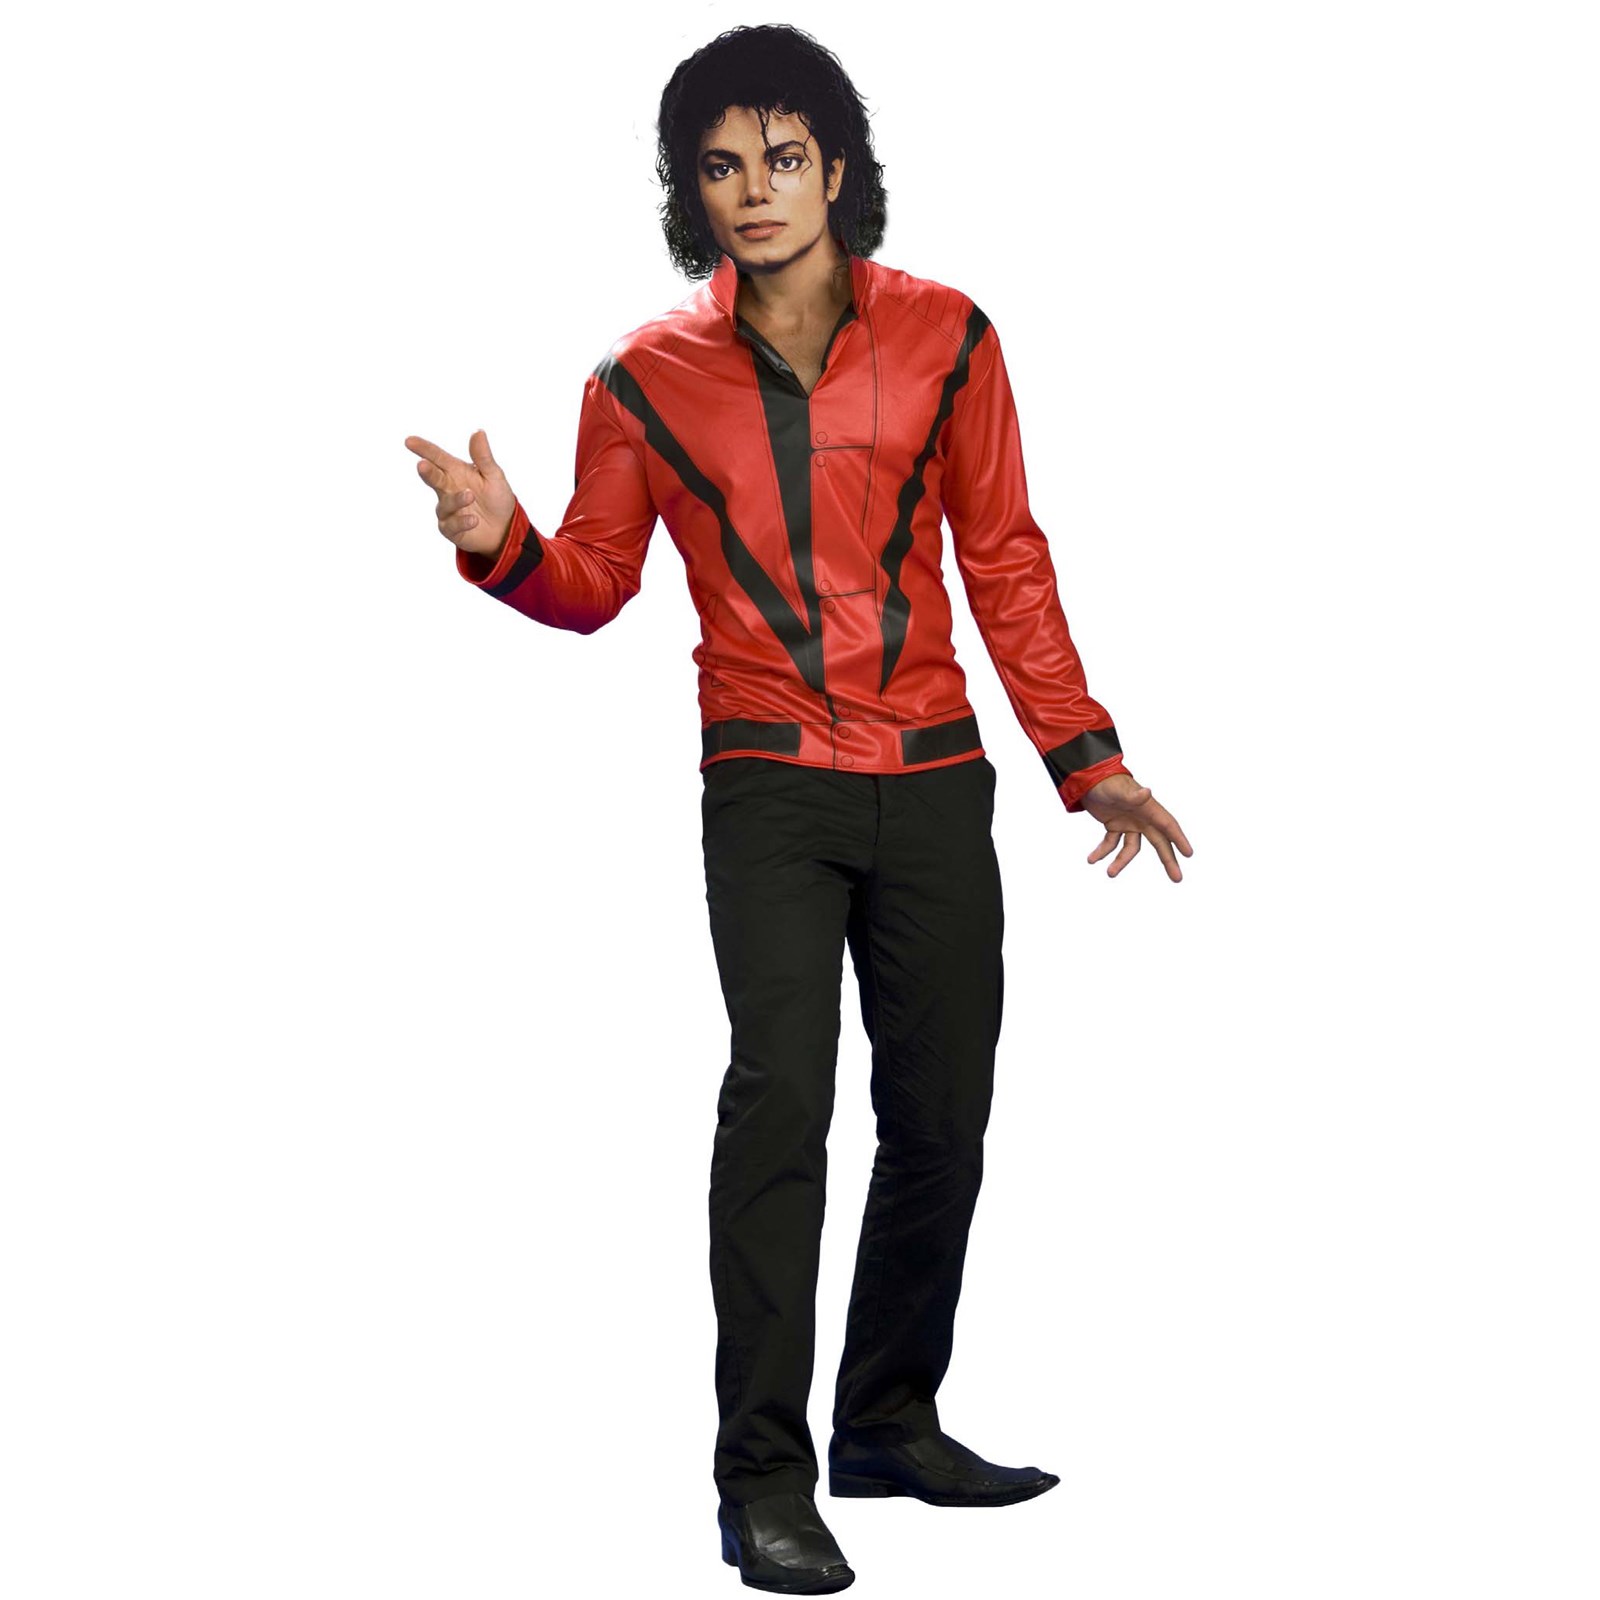 Men's Red Thriller Jacket Michael Jackson Costume, Adult, Halloween Costume - image 1 of 2